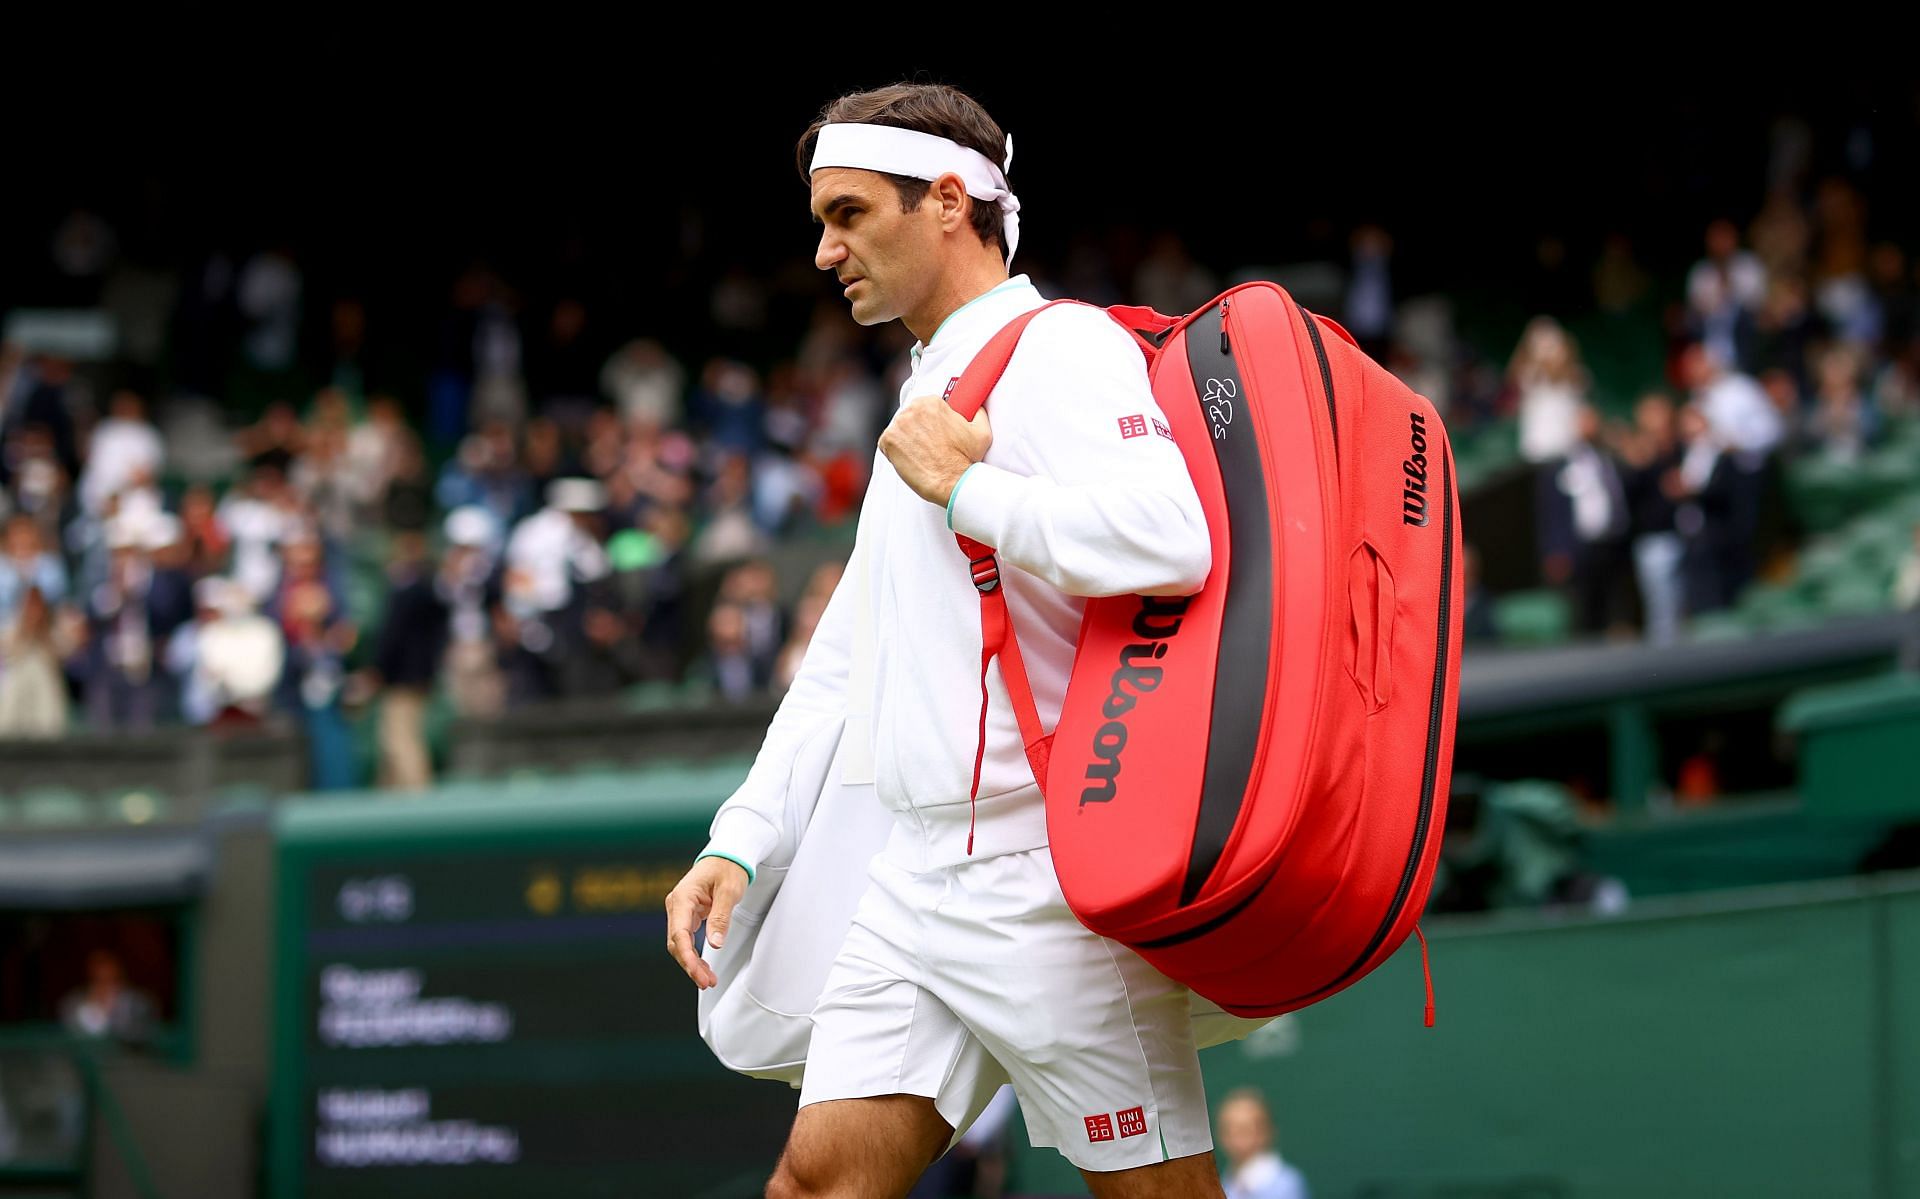 Roger Federer at the 2021 Wimbledon Championships.